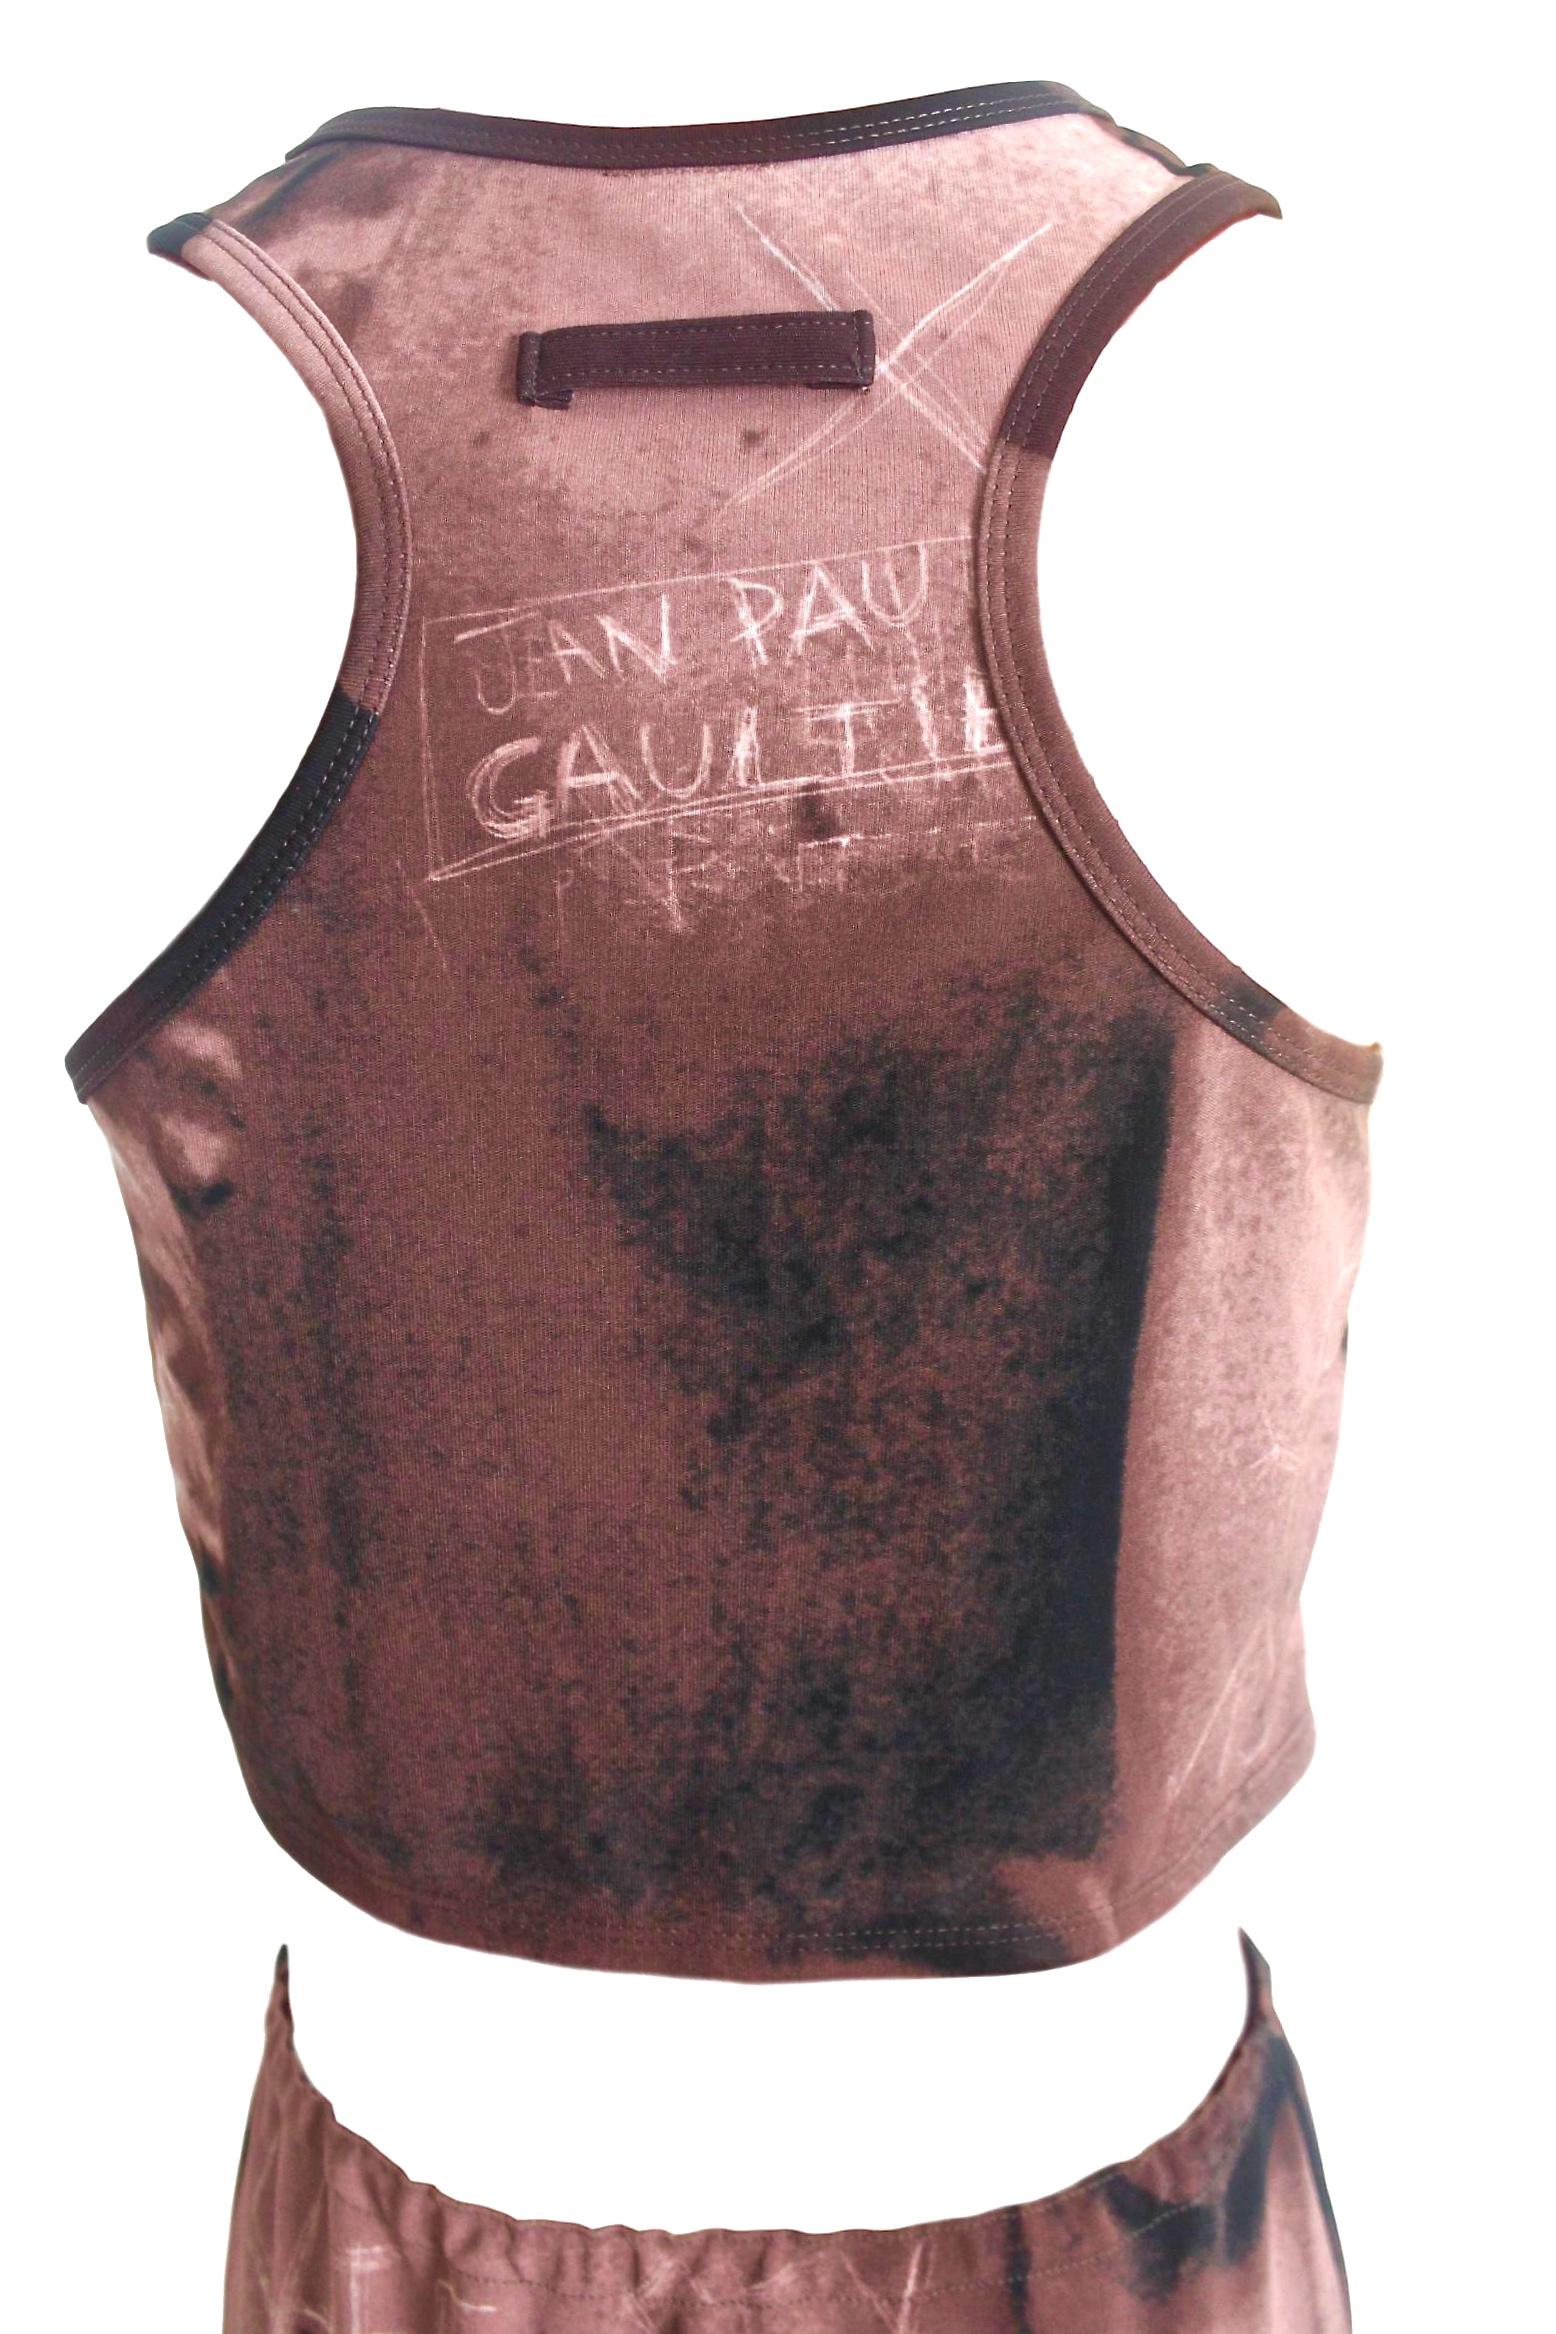 Jean Paul Gaultier 1998/9 Trompe l'oeil Goddess Graffiti Outfit 1